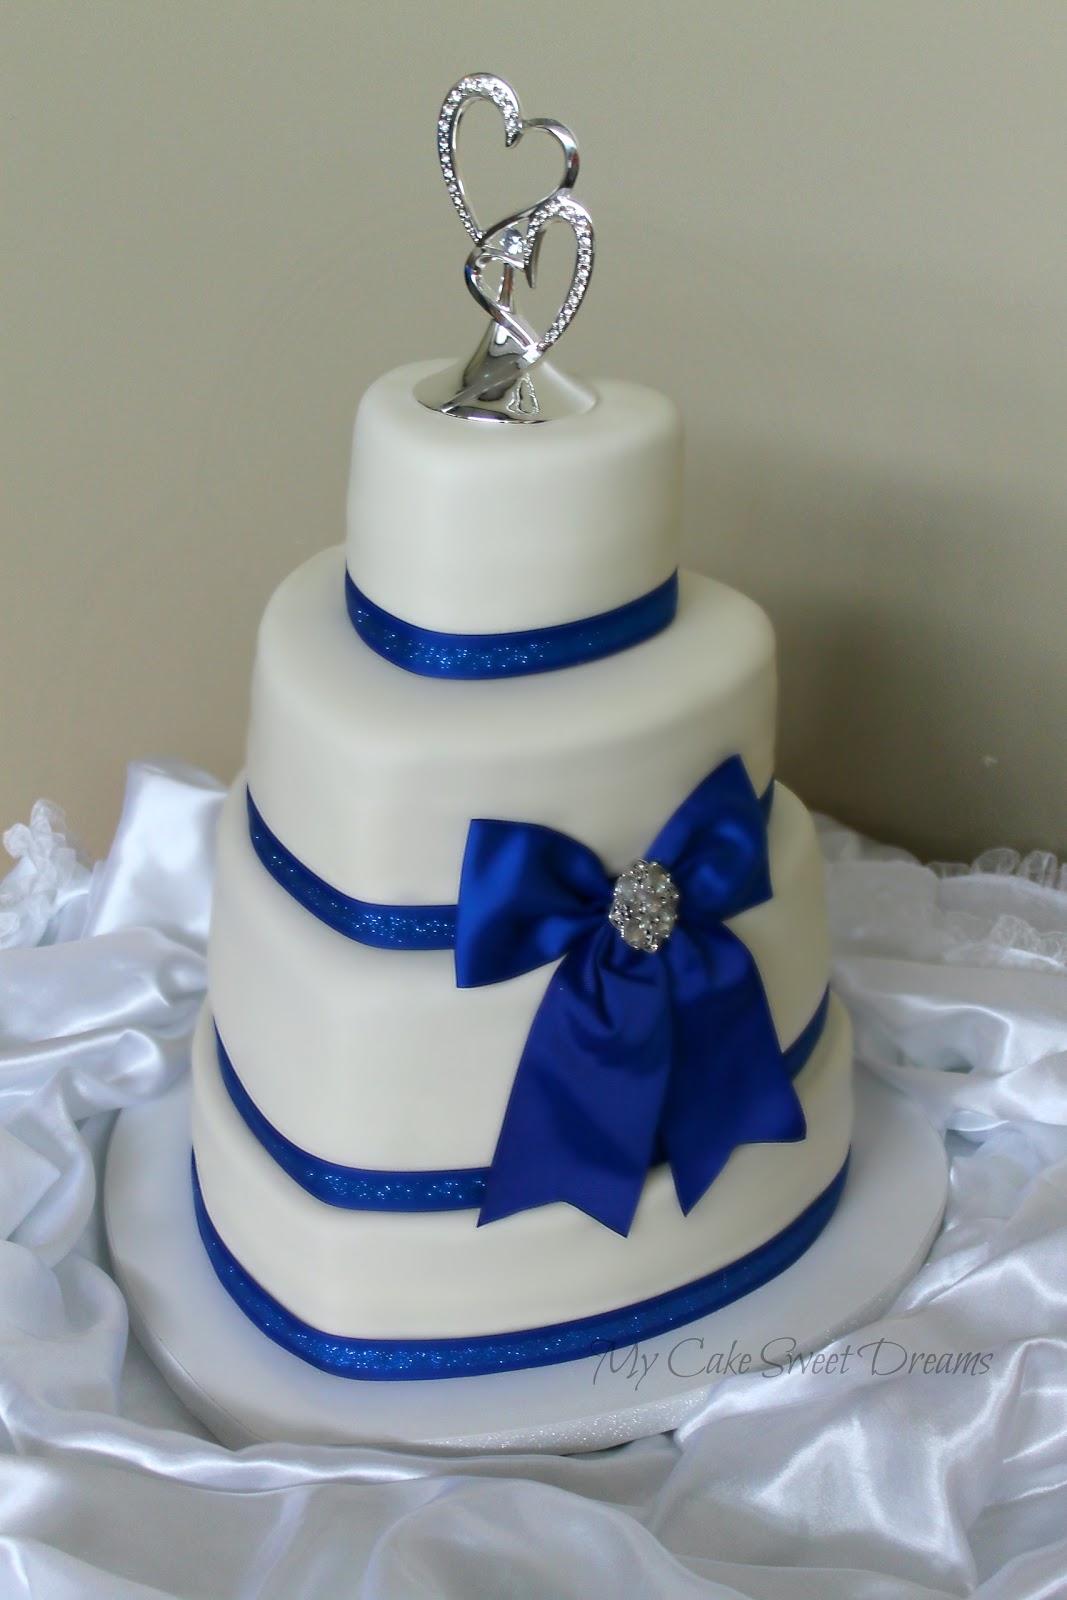  My Cake  Sweet Dreams Heart  Wedding  Cake 